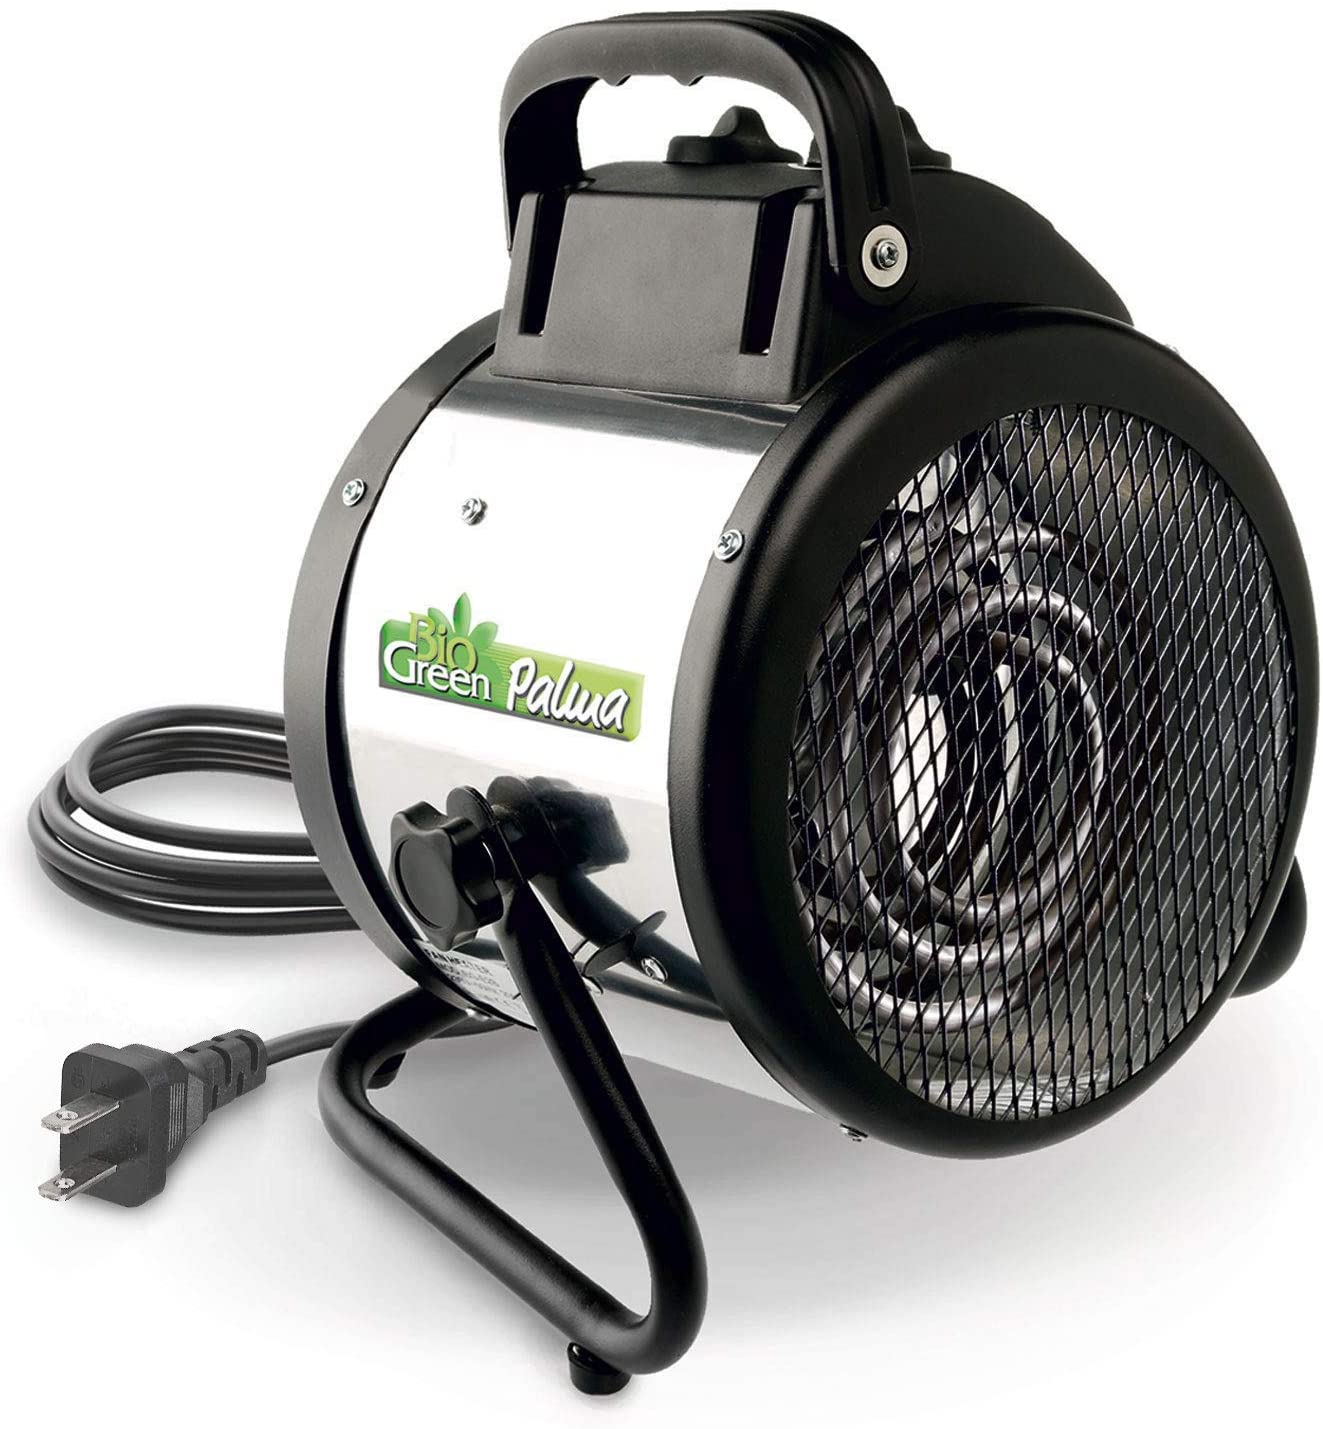 Review of Bio Green PAL 2.0/US Palma BioGreen Basic Electric Fan Heater for Greenhouses